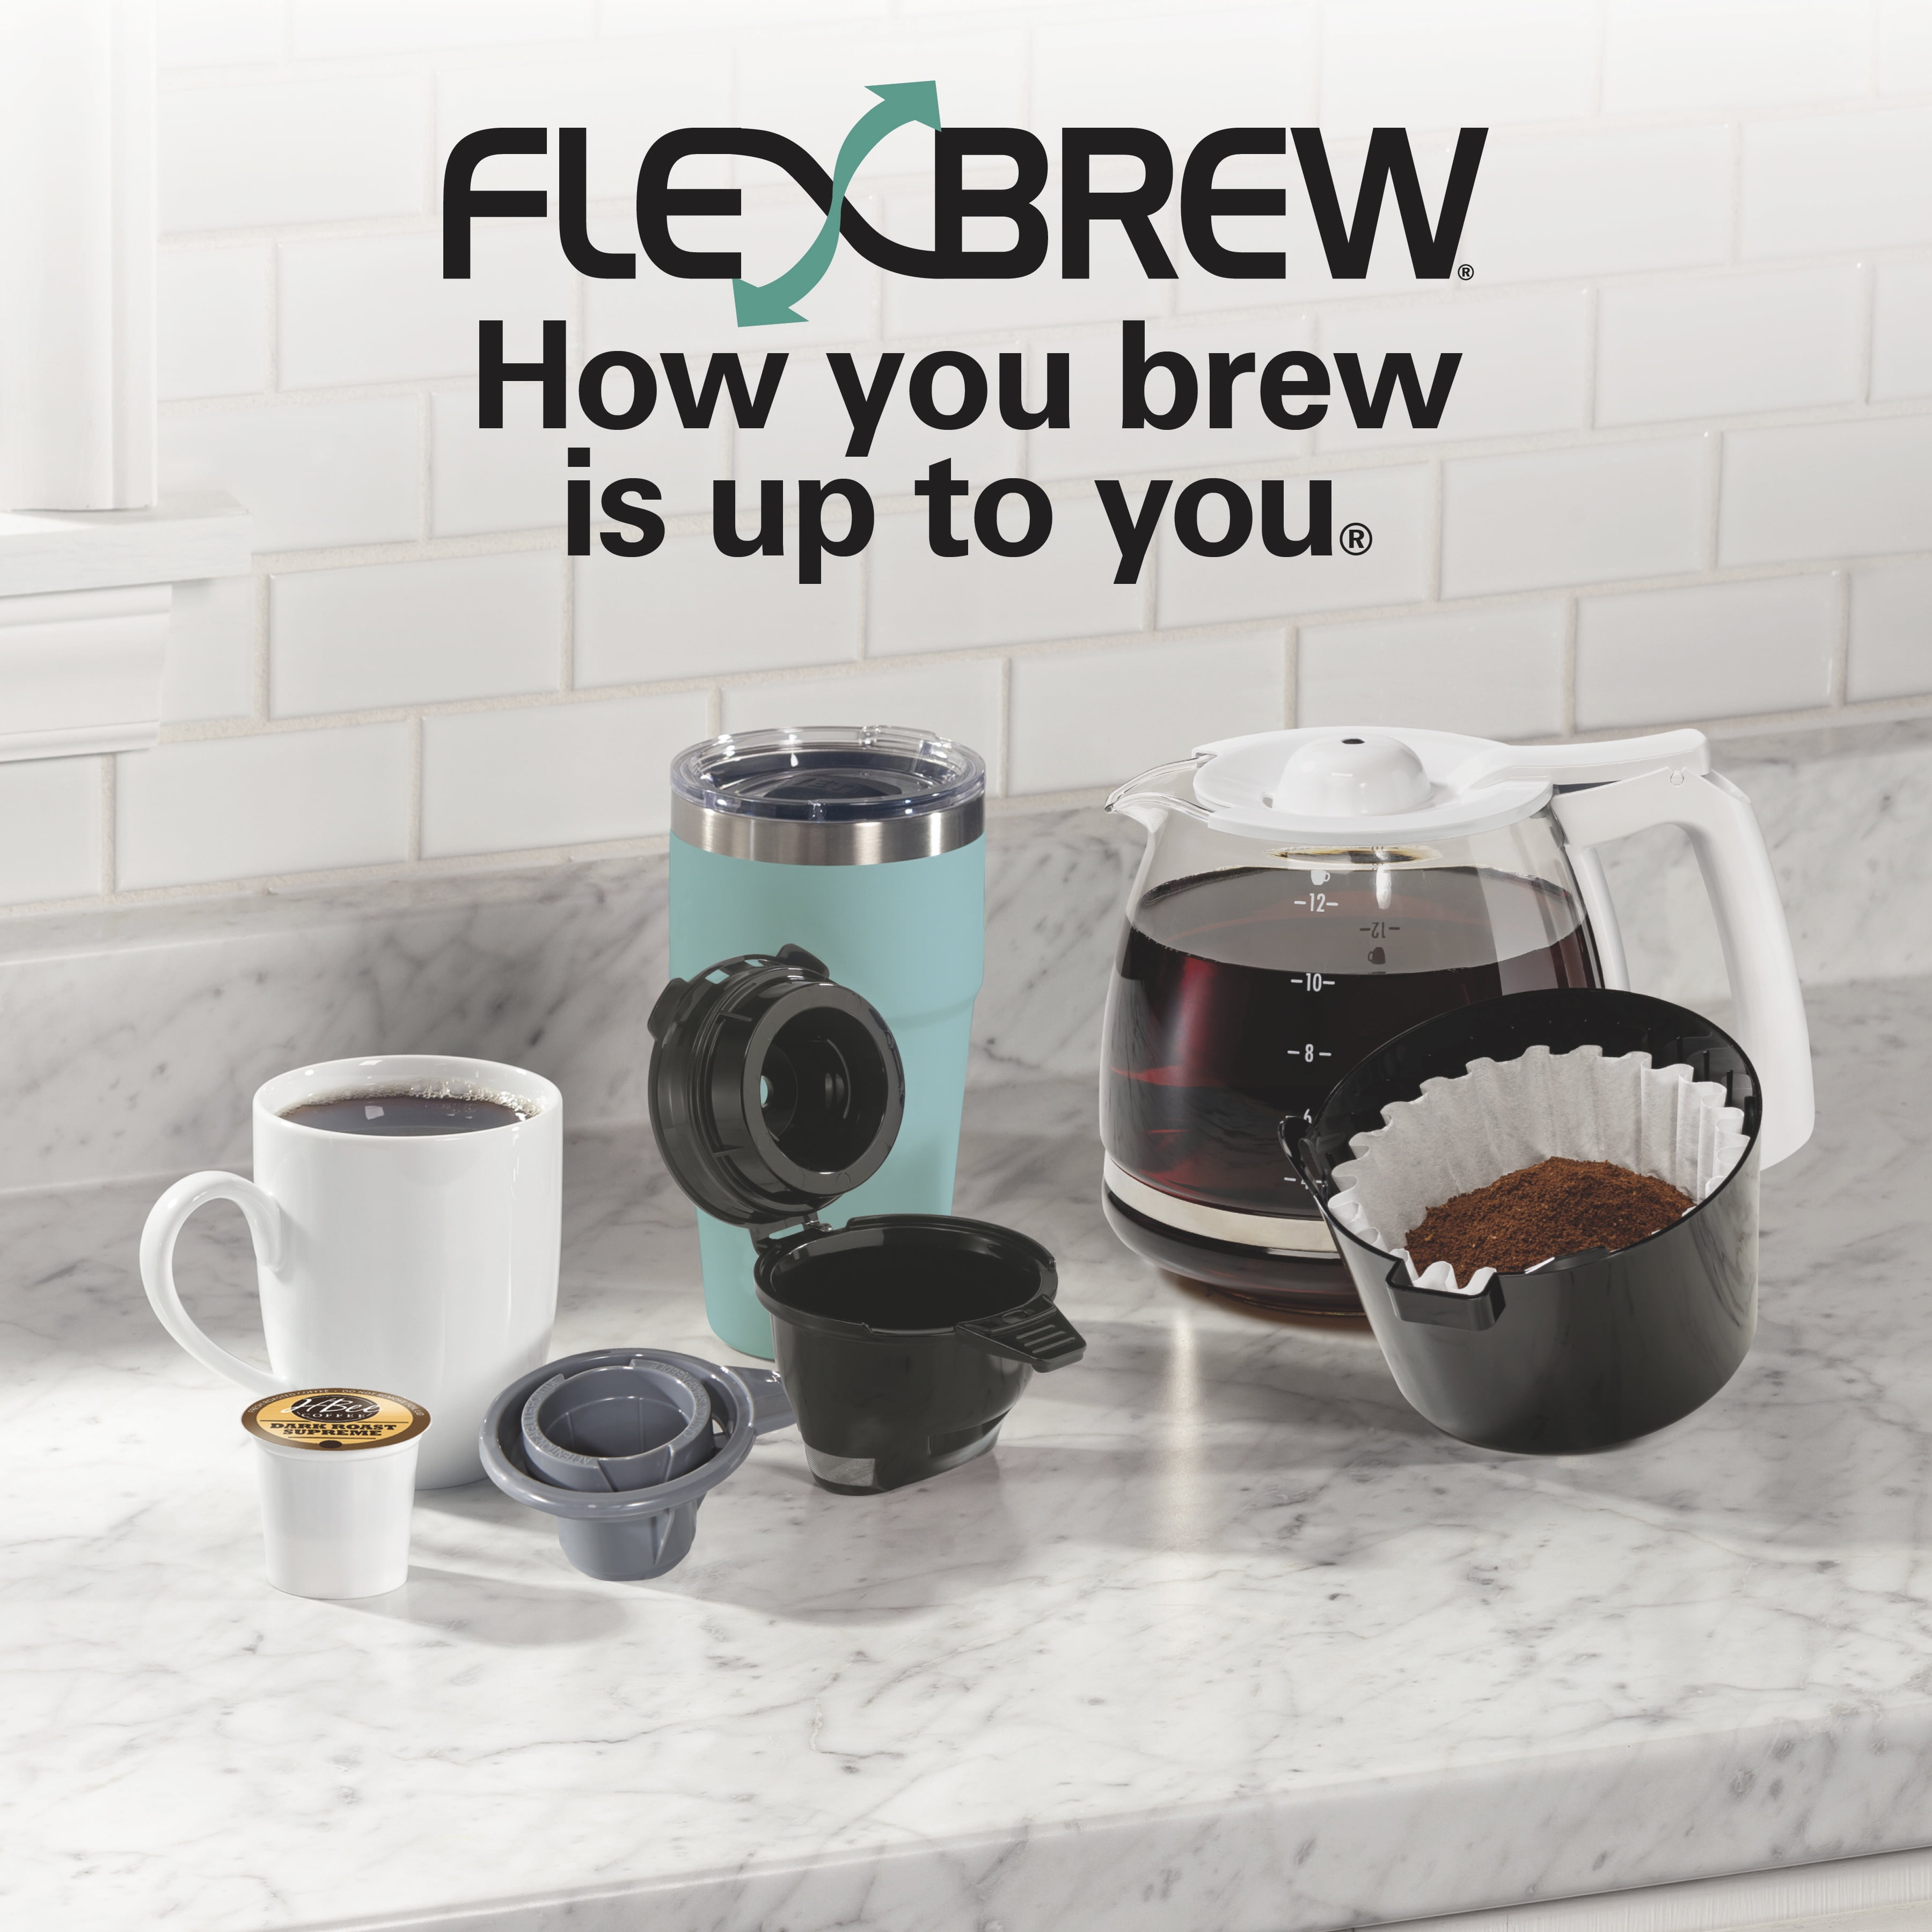 Hamilton Beach Recertified FlexBrew® Trio Coffee Maker with 40 oz